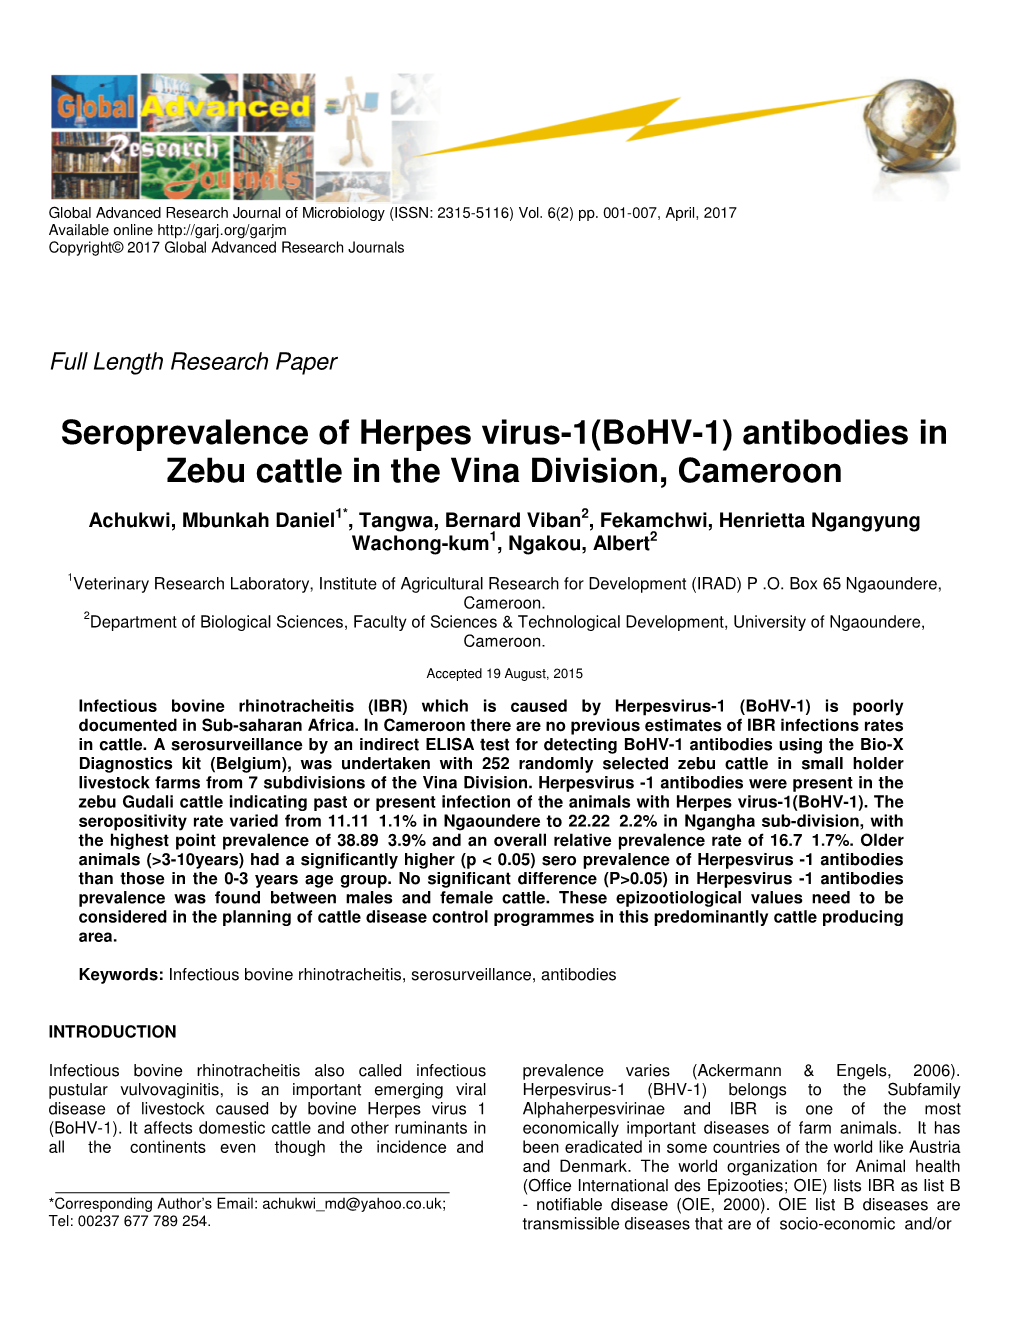 Seroprevalence of Herpes Virus-1(Bohv-1) Antibodies in Zebu Cattle in the Vina Division, Cameroon